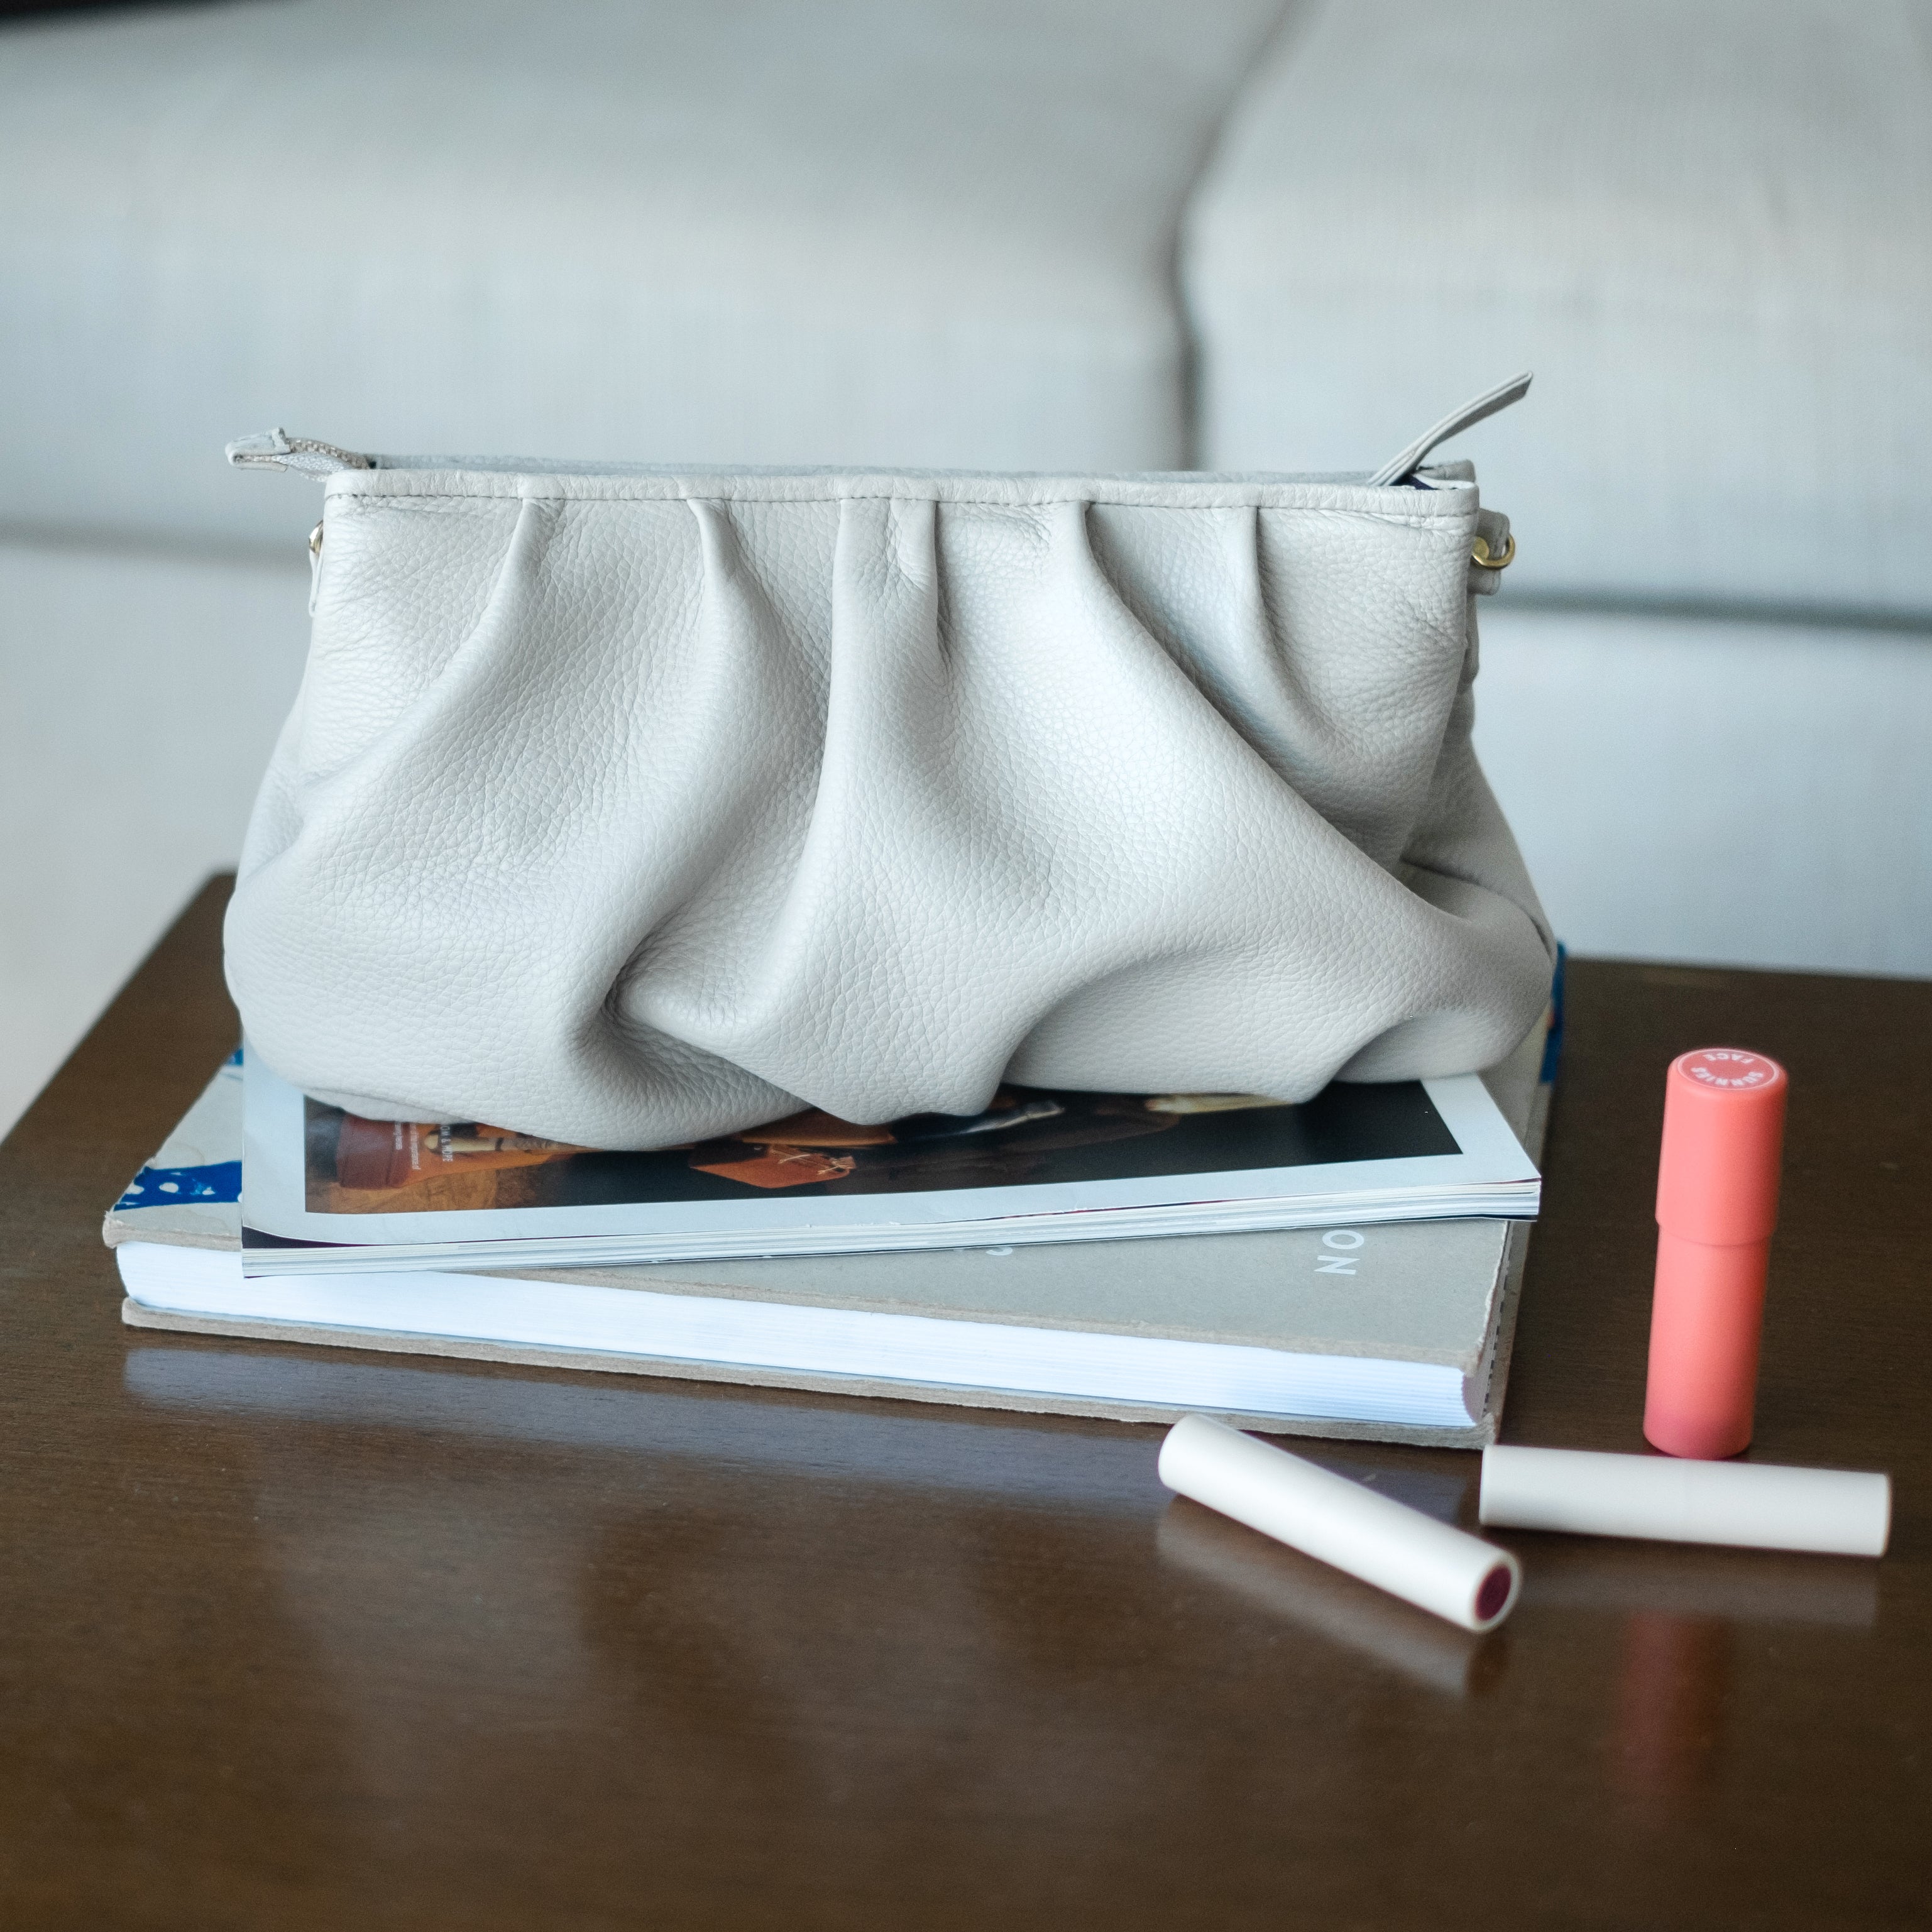 light gray clutch bag on a table